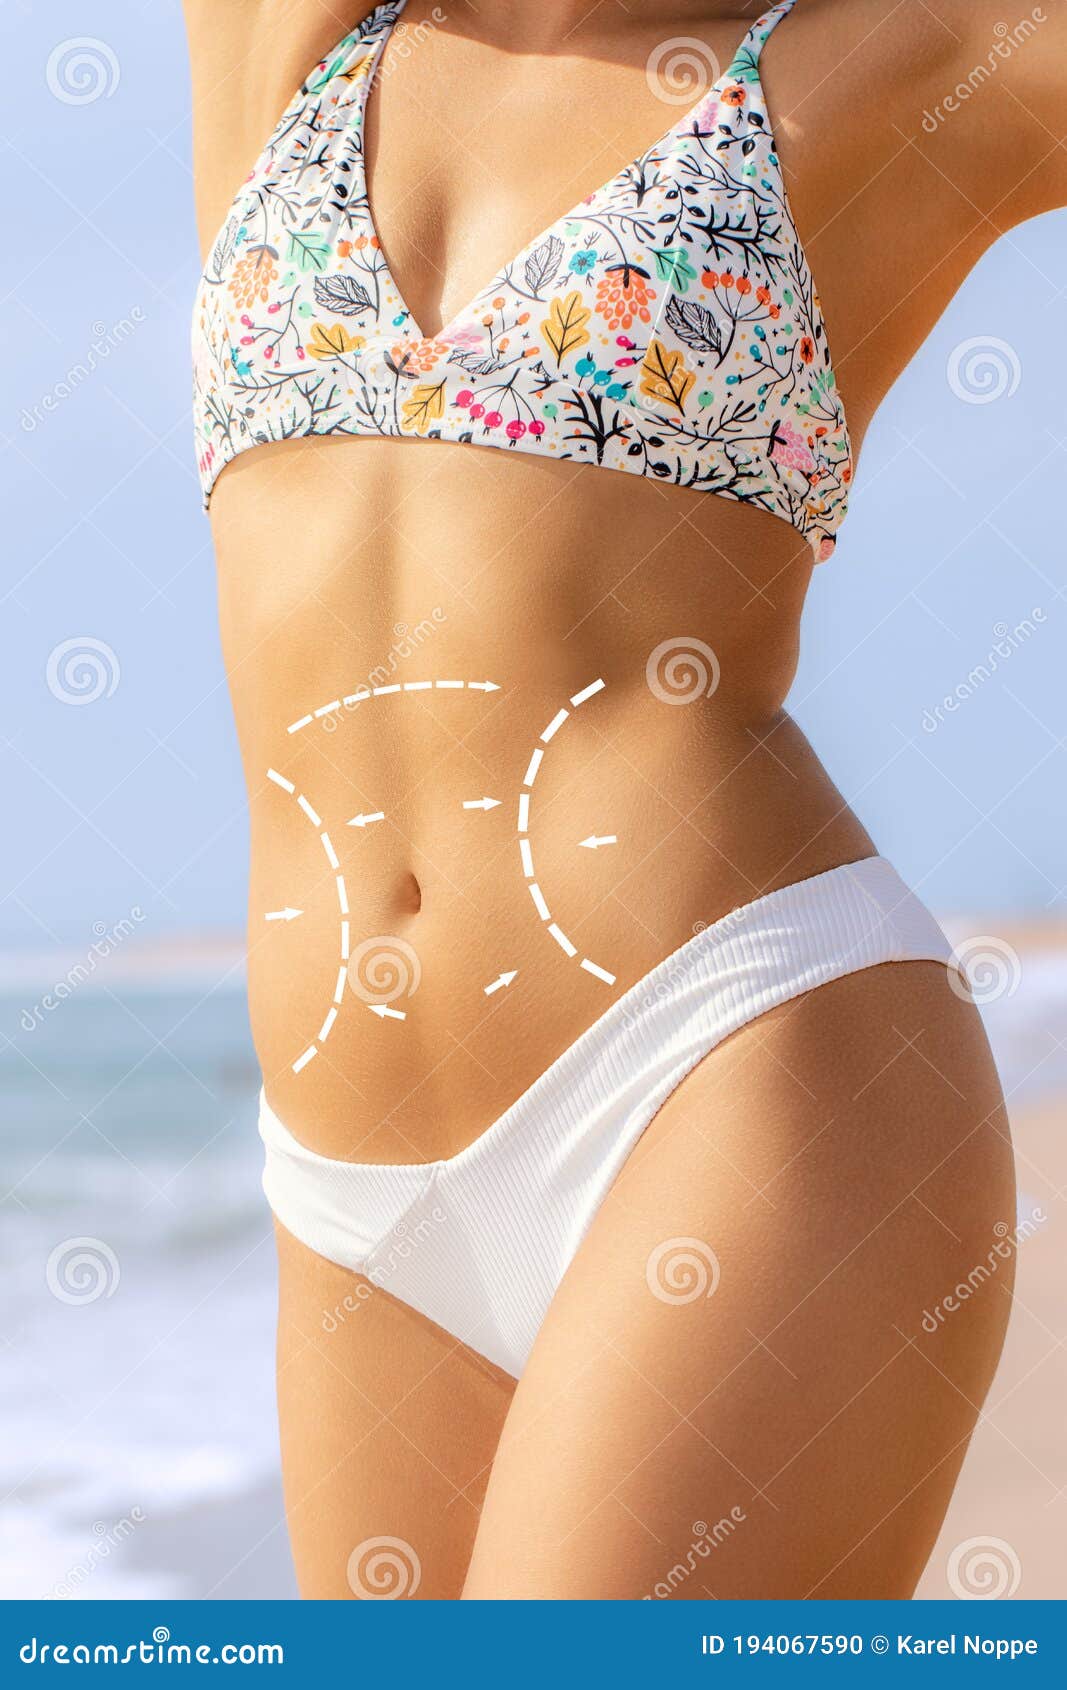 conceptual tummy tuck incision contour lines on female torso